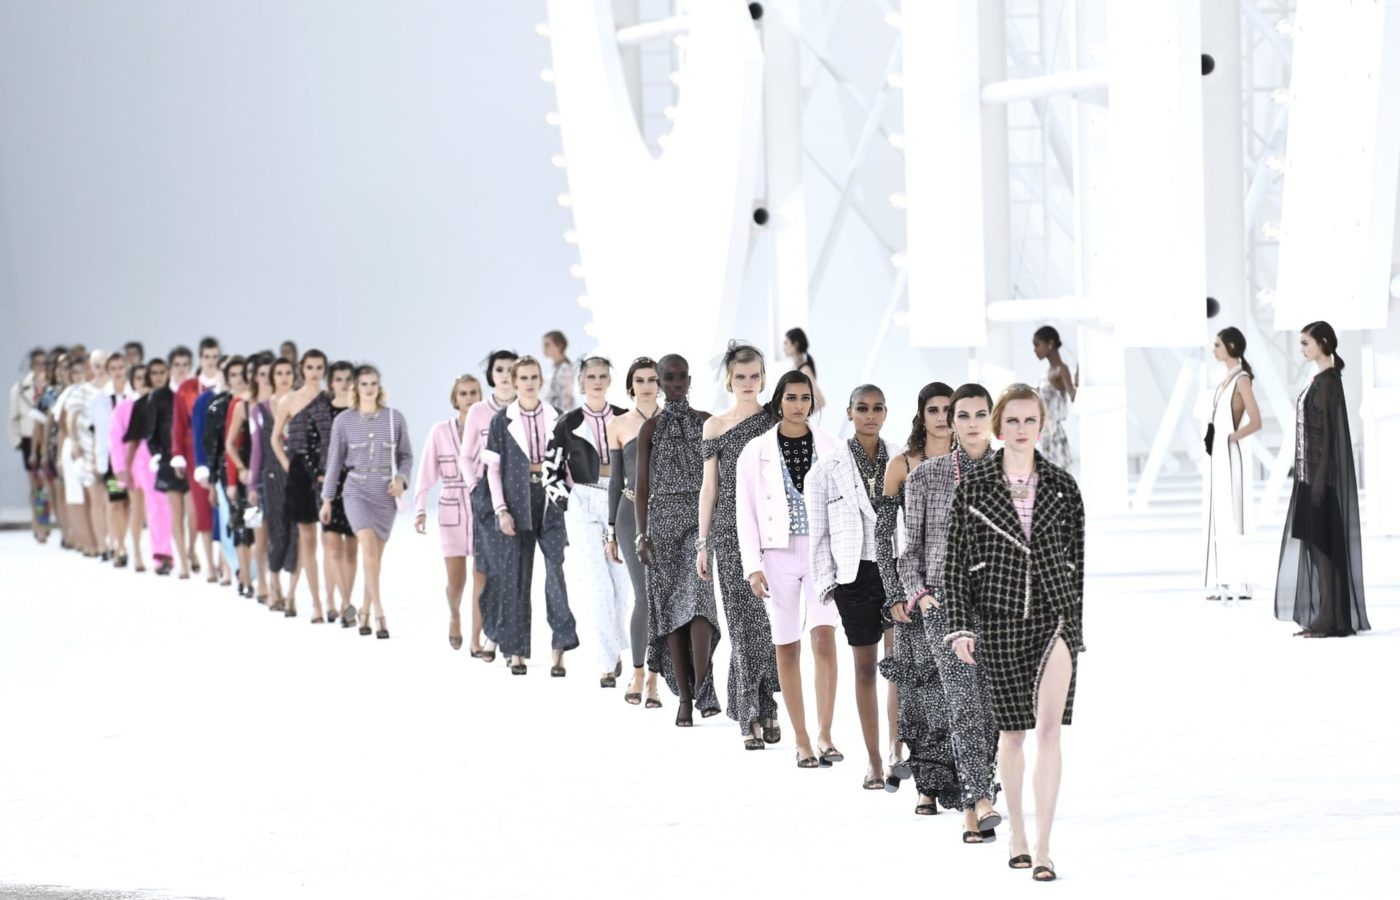 Louis Vuitton runway not lacking any drama in Paris